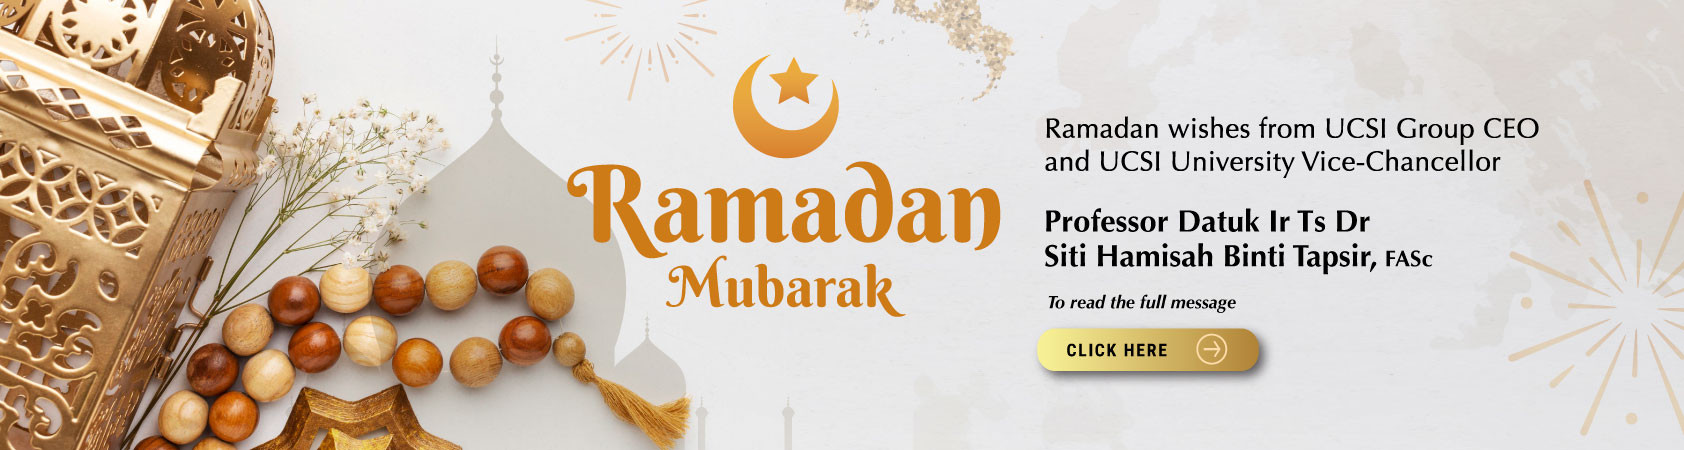 VC Ramadan Message